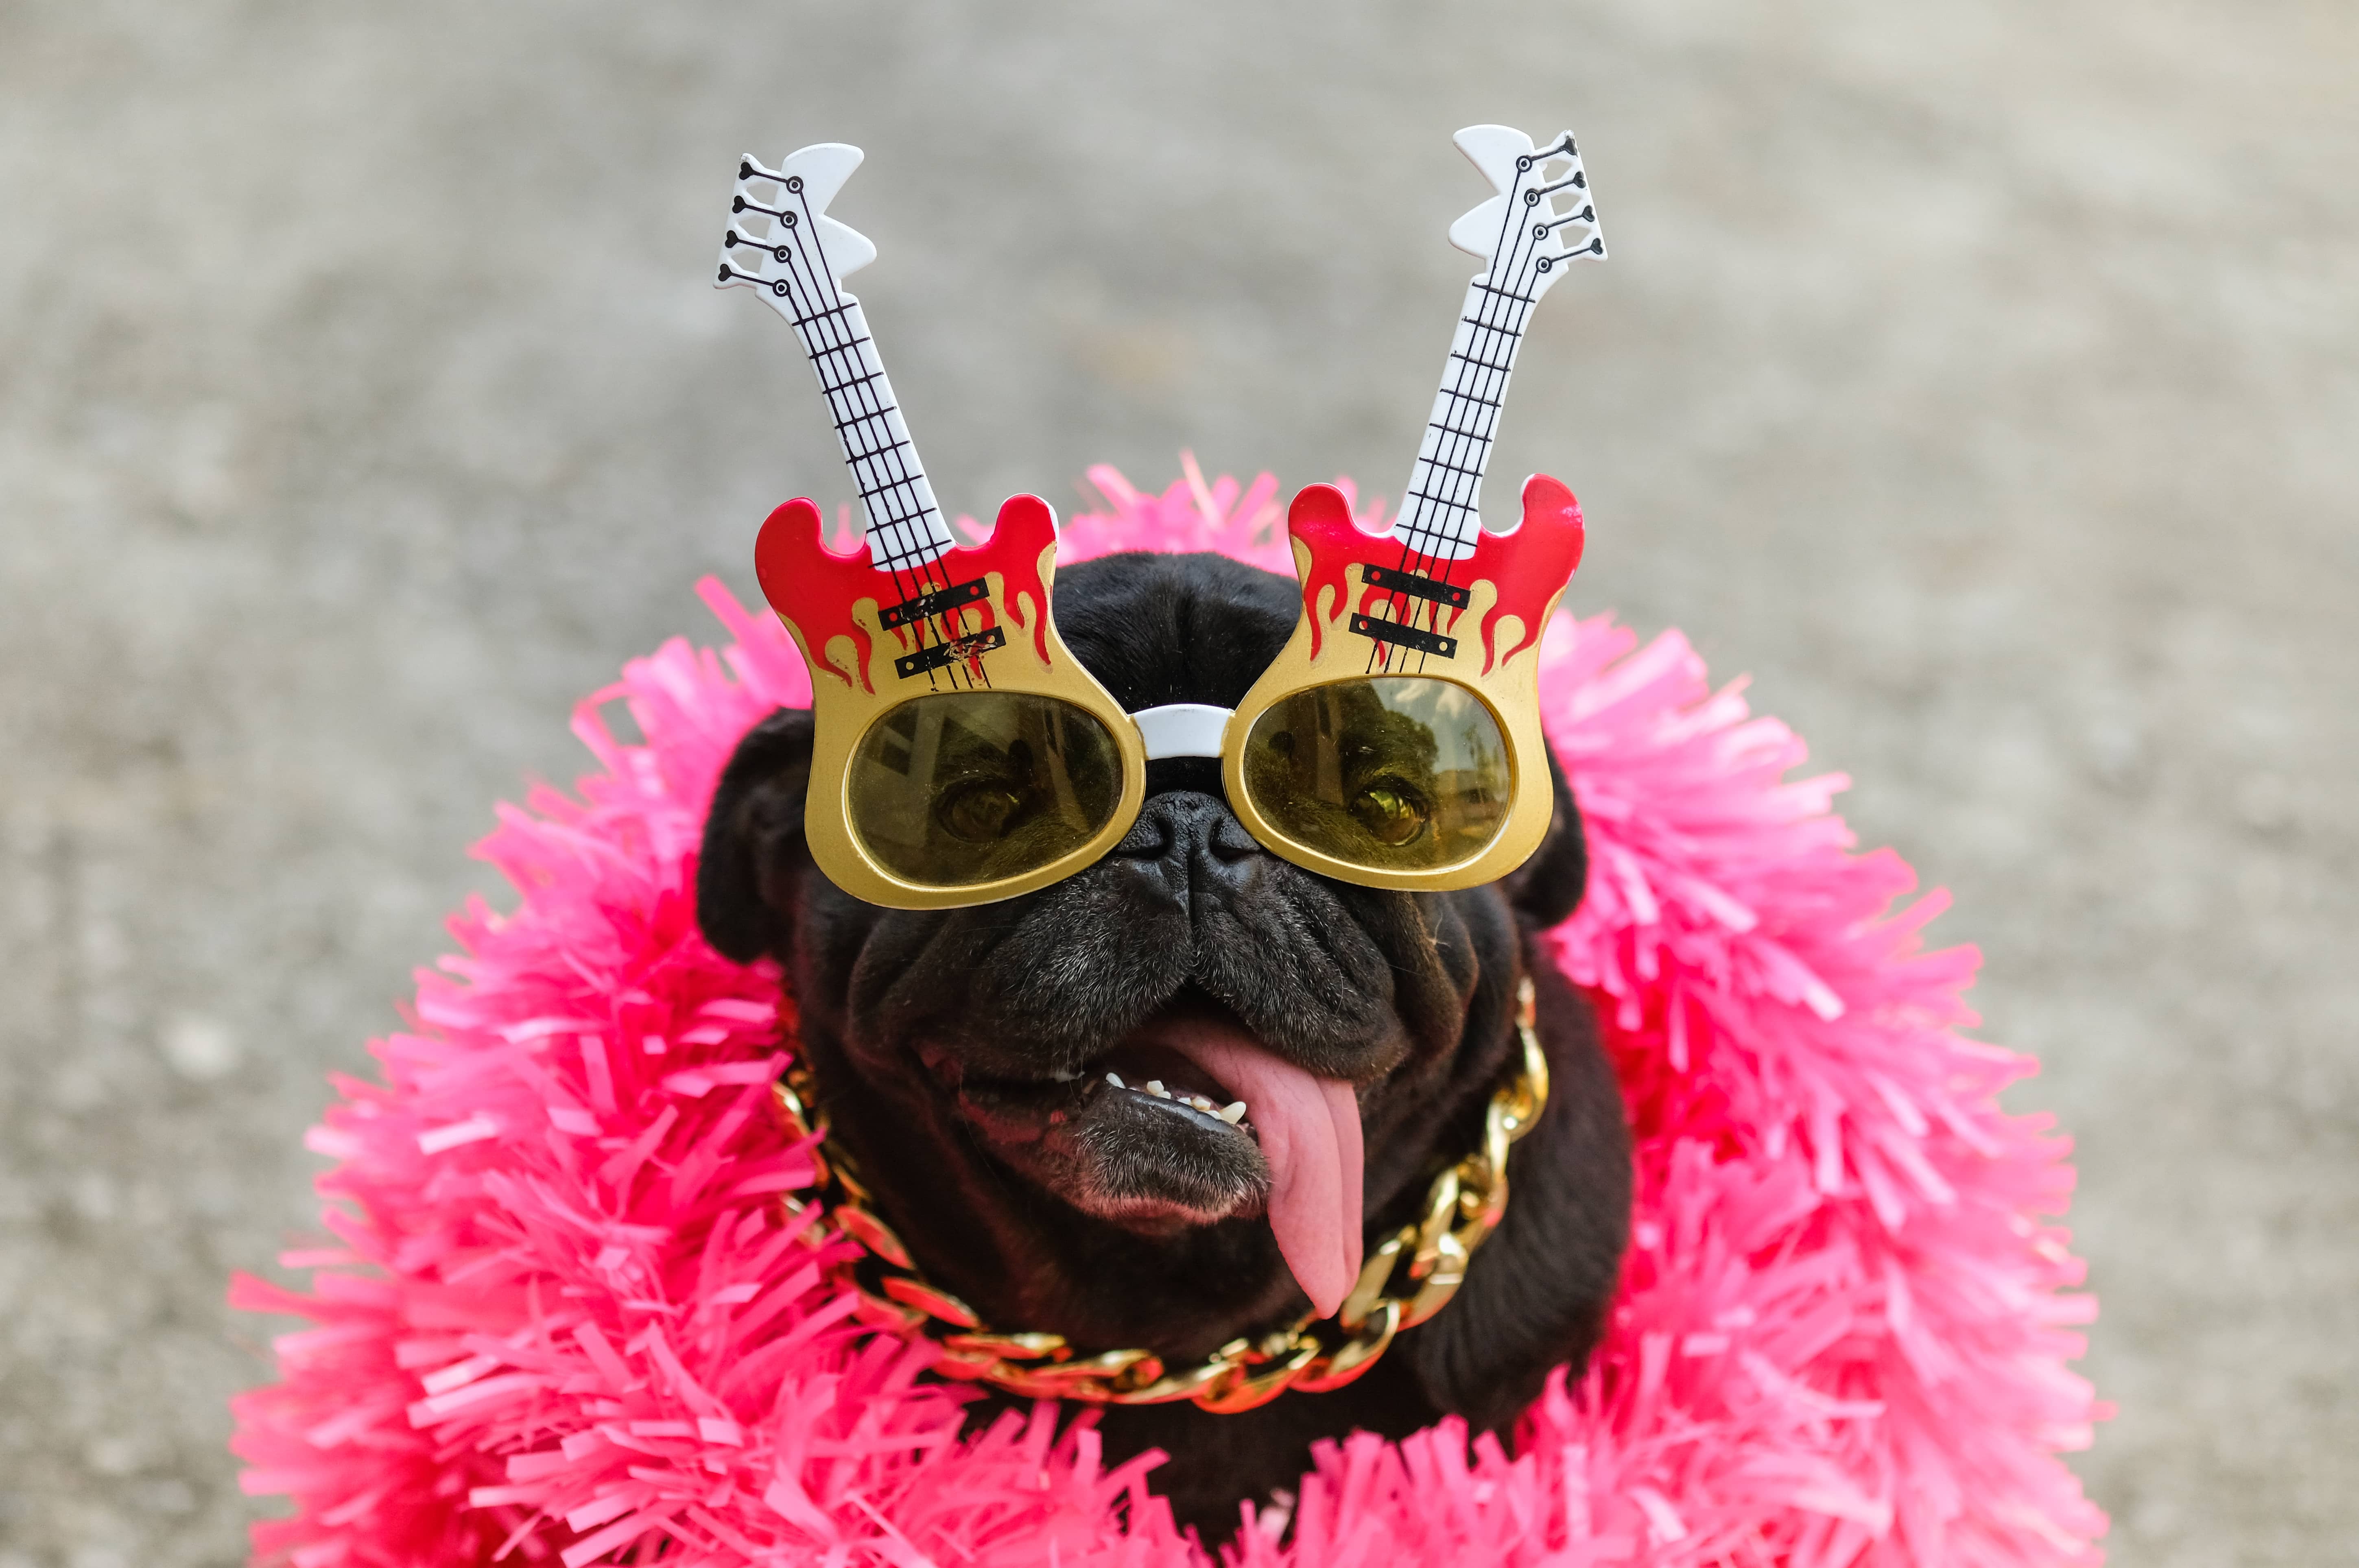 Funny Pug dog wearing rock star costume.